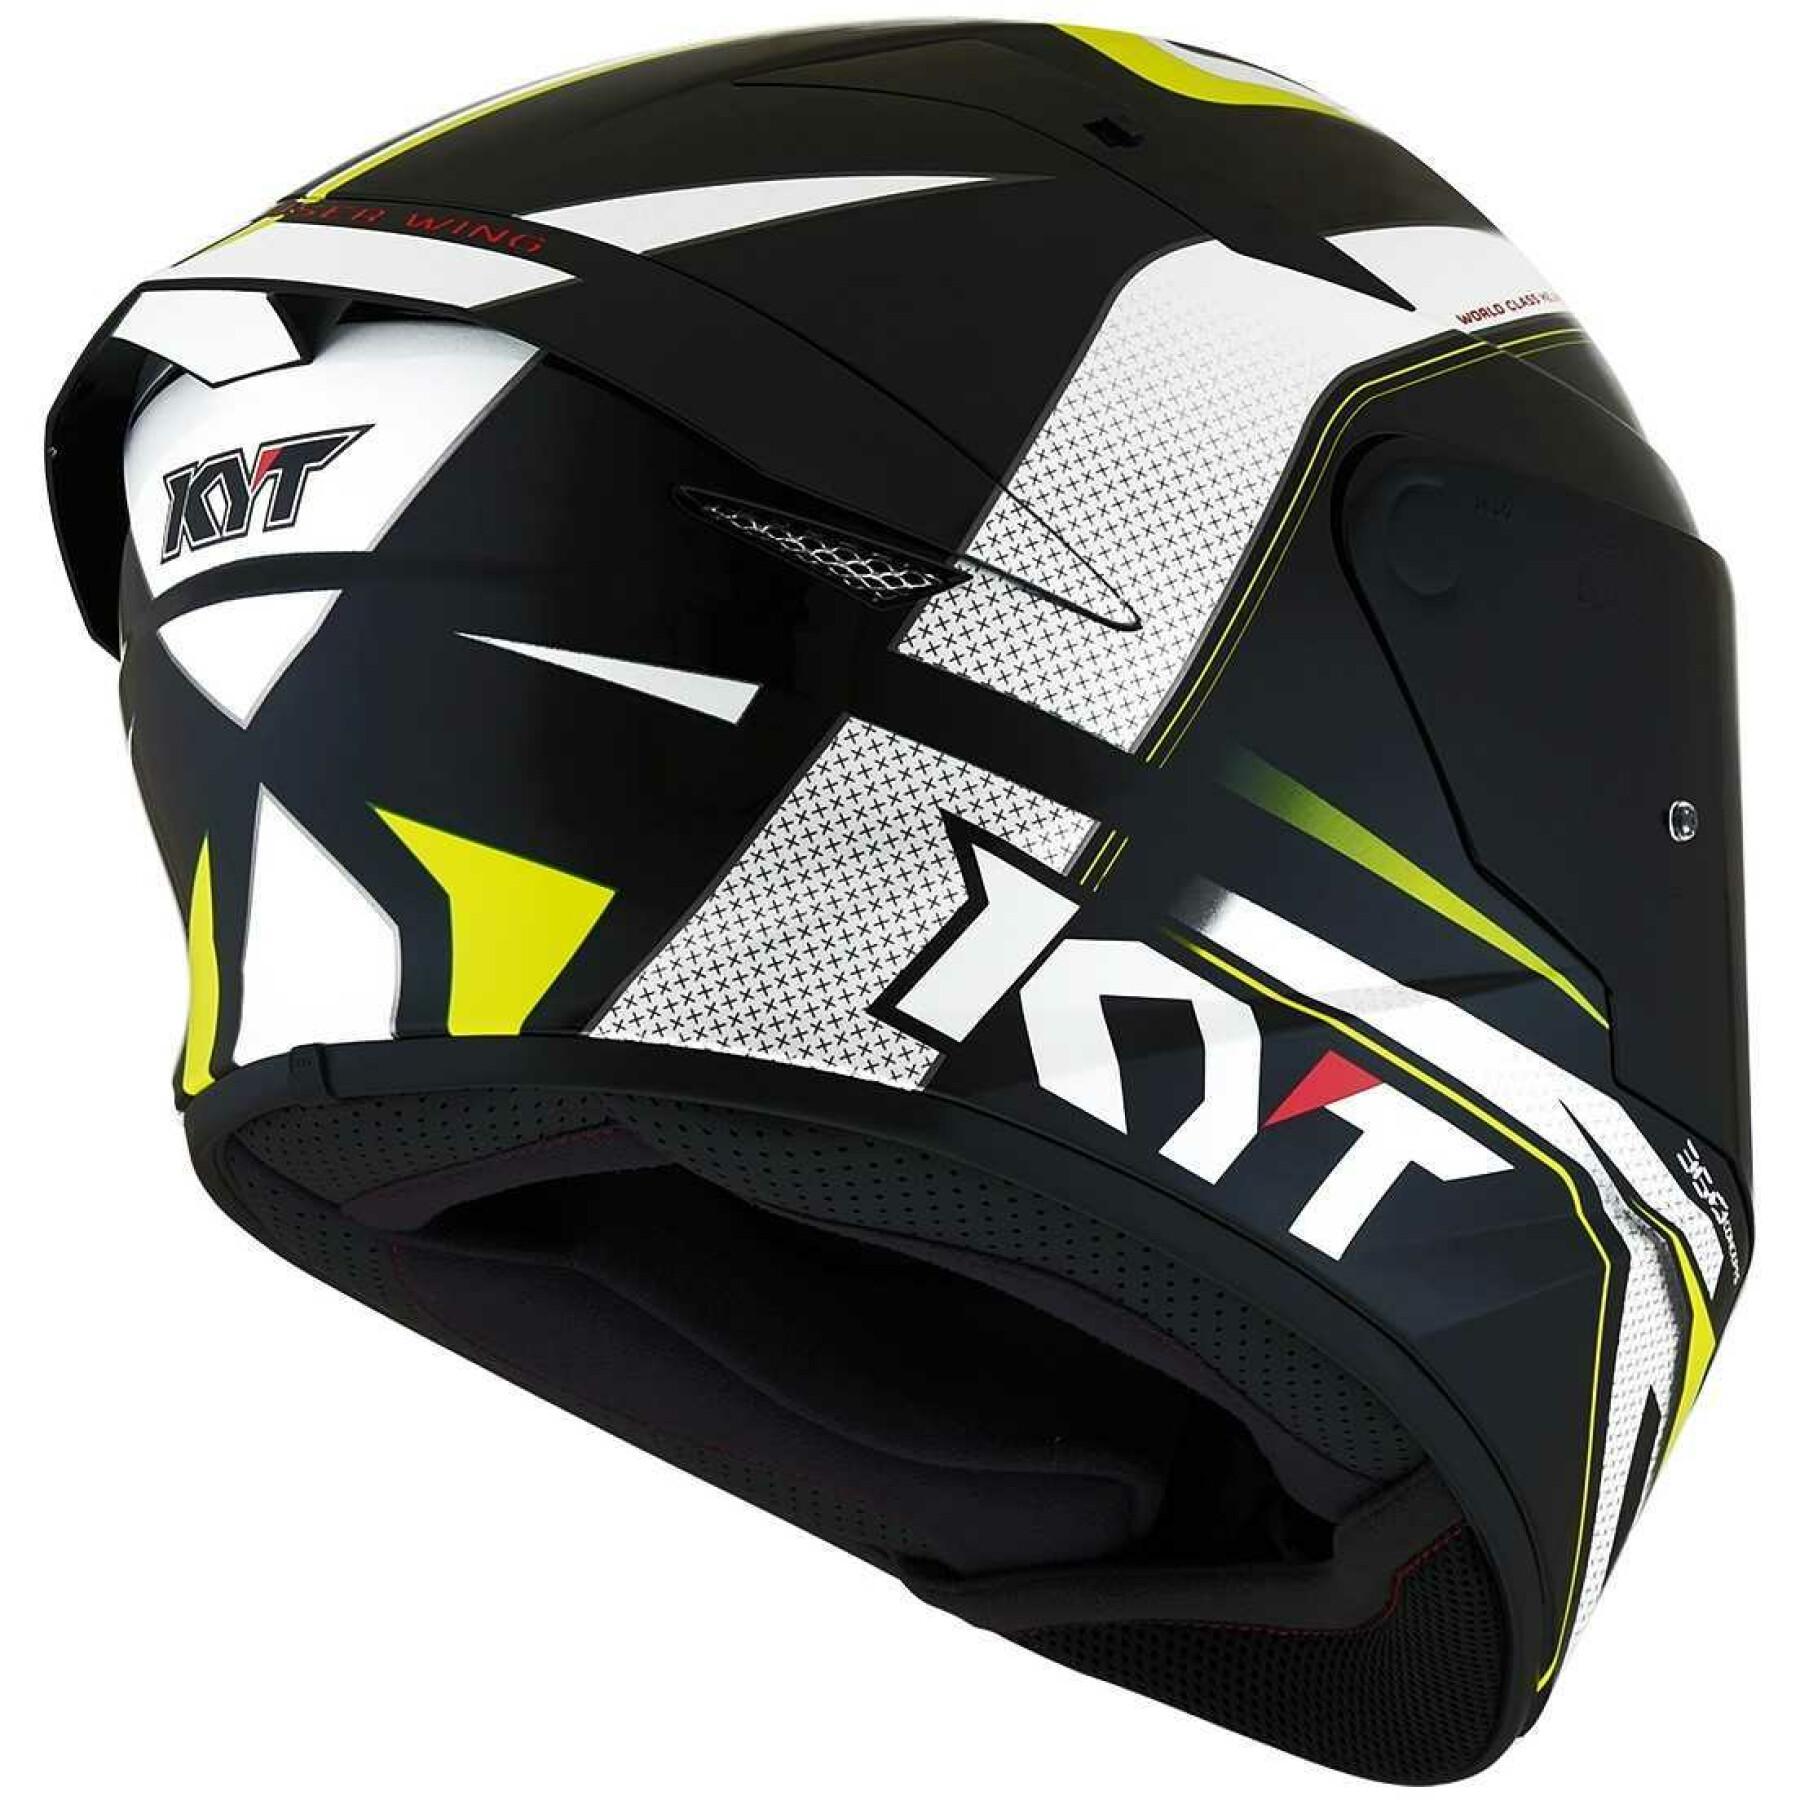 Track helmet Kyt tt-course grand prix